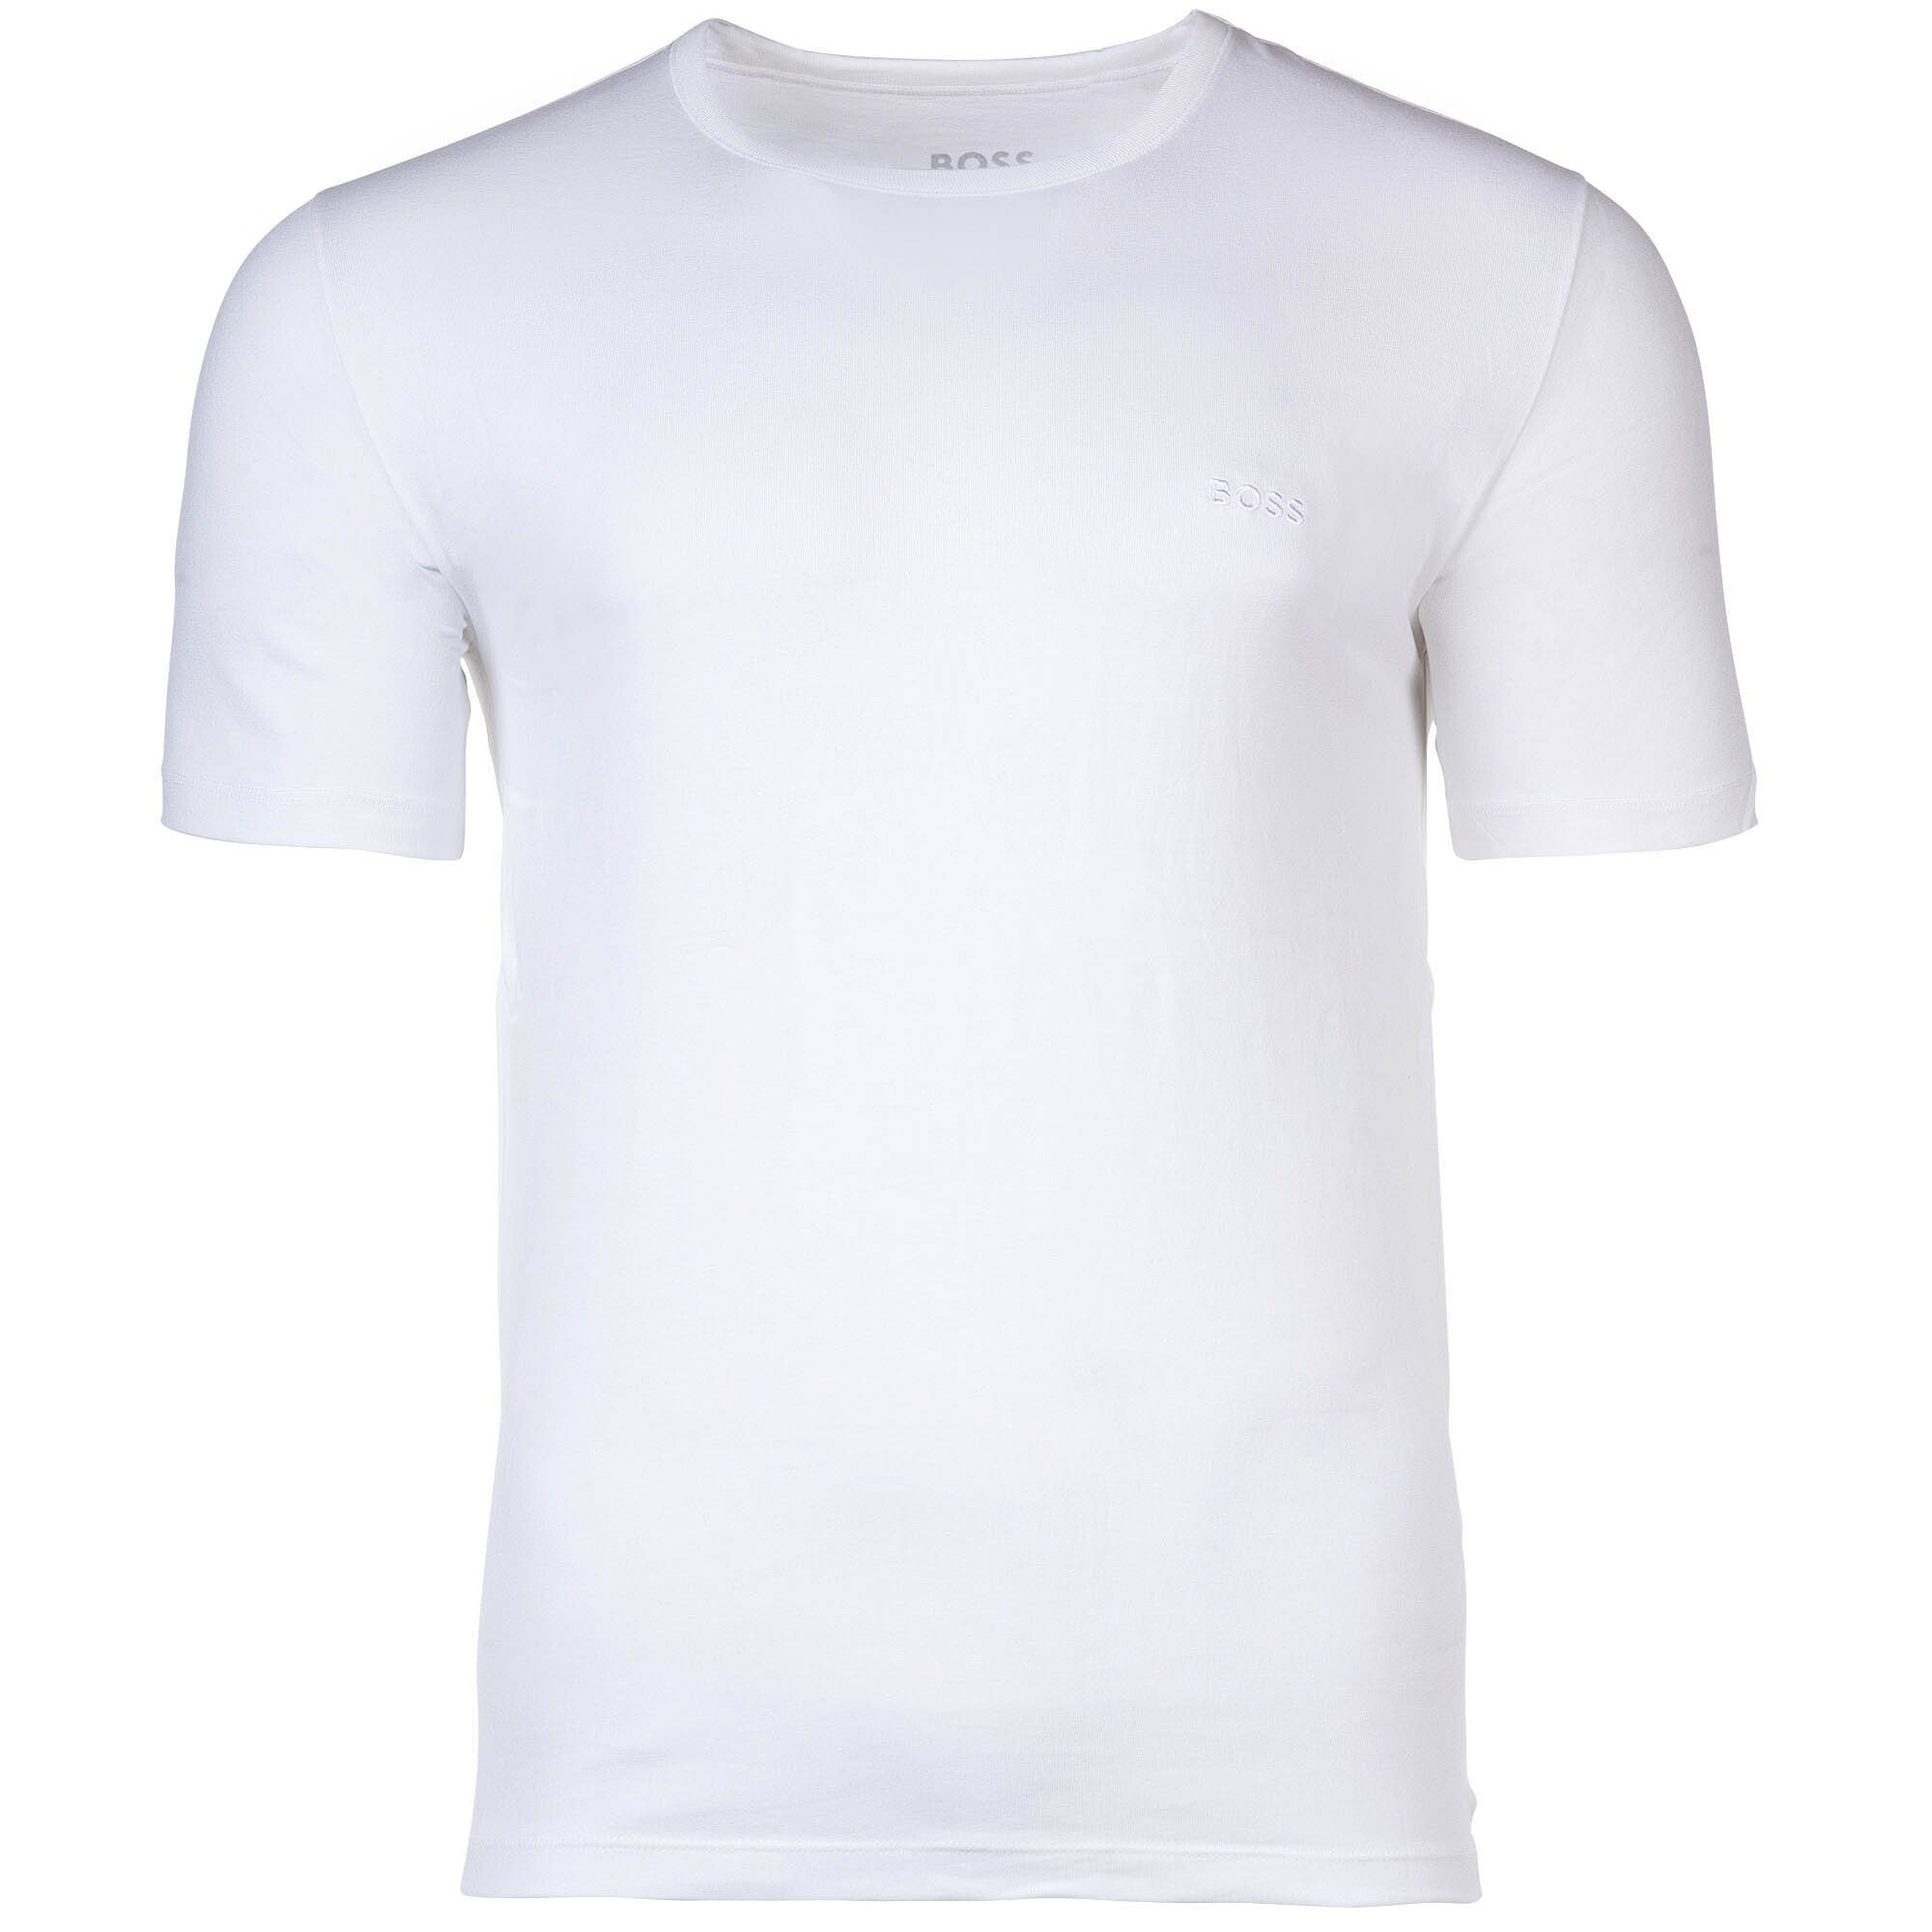 BOSS T-Shirt Herren Schwarz/Blau/Weiß - RN Rundhals 6er T-Shirt, Pack Classic